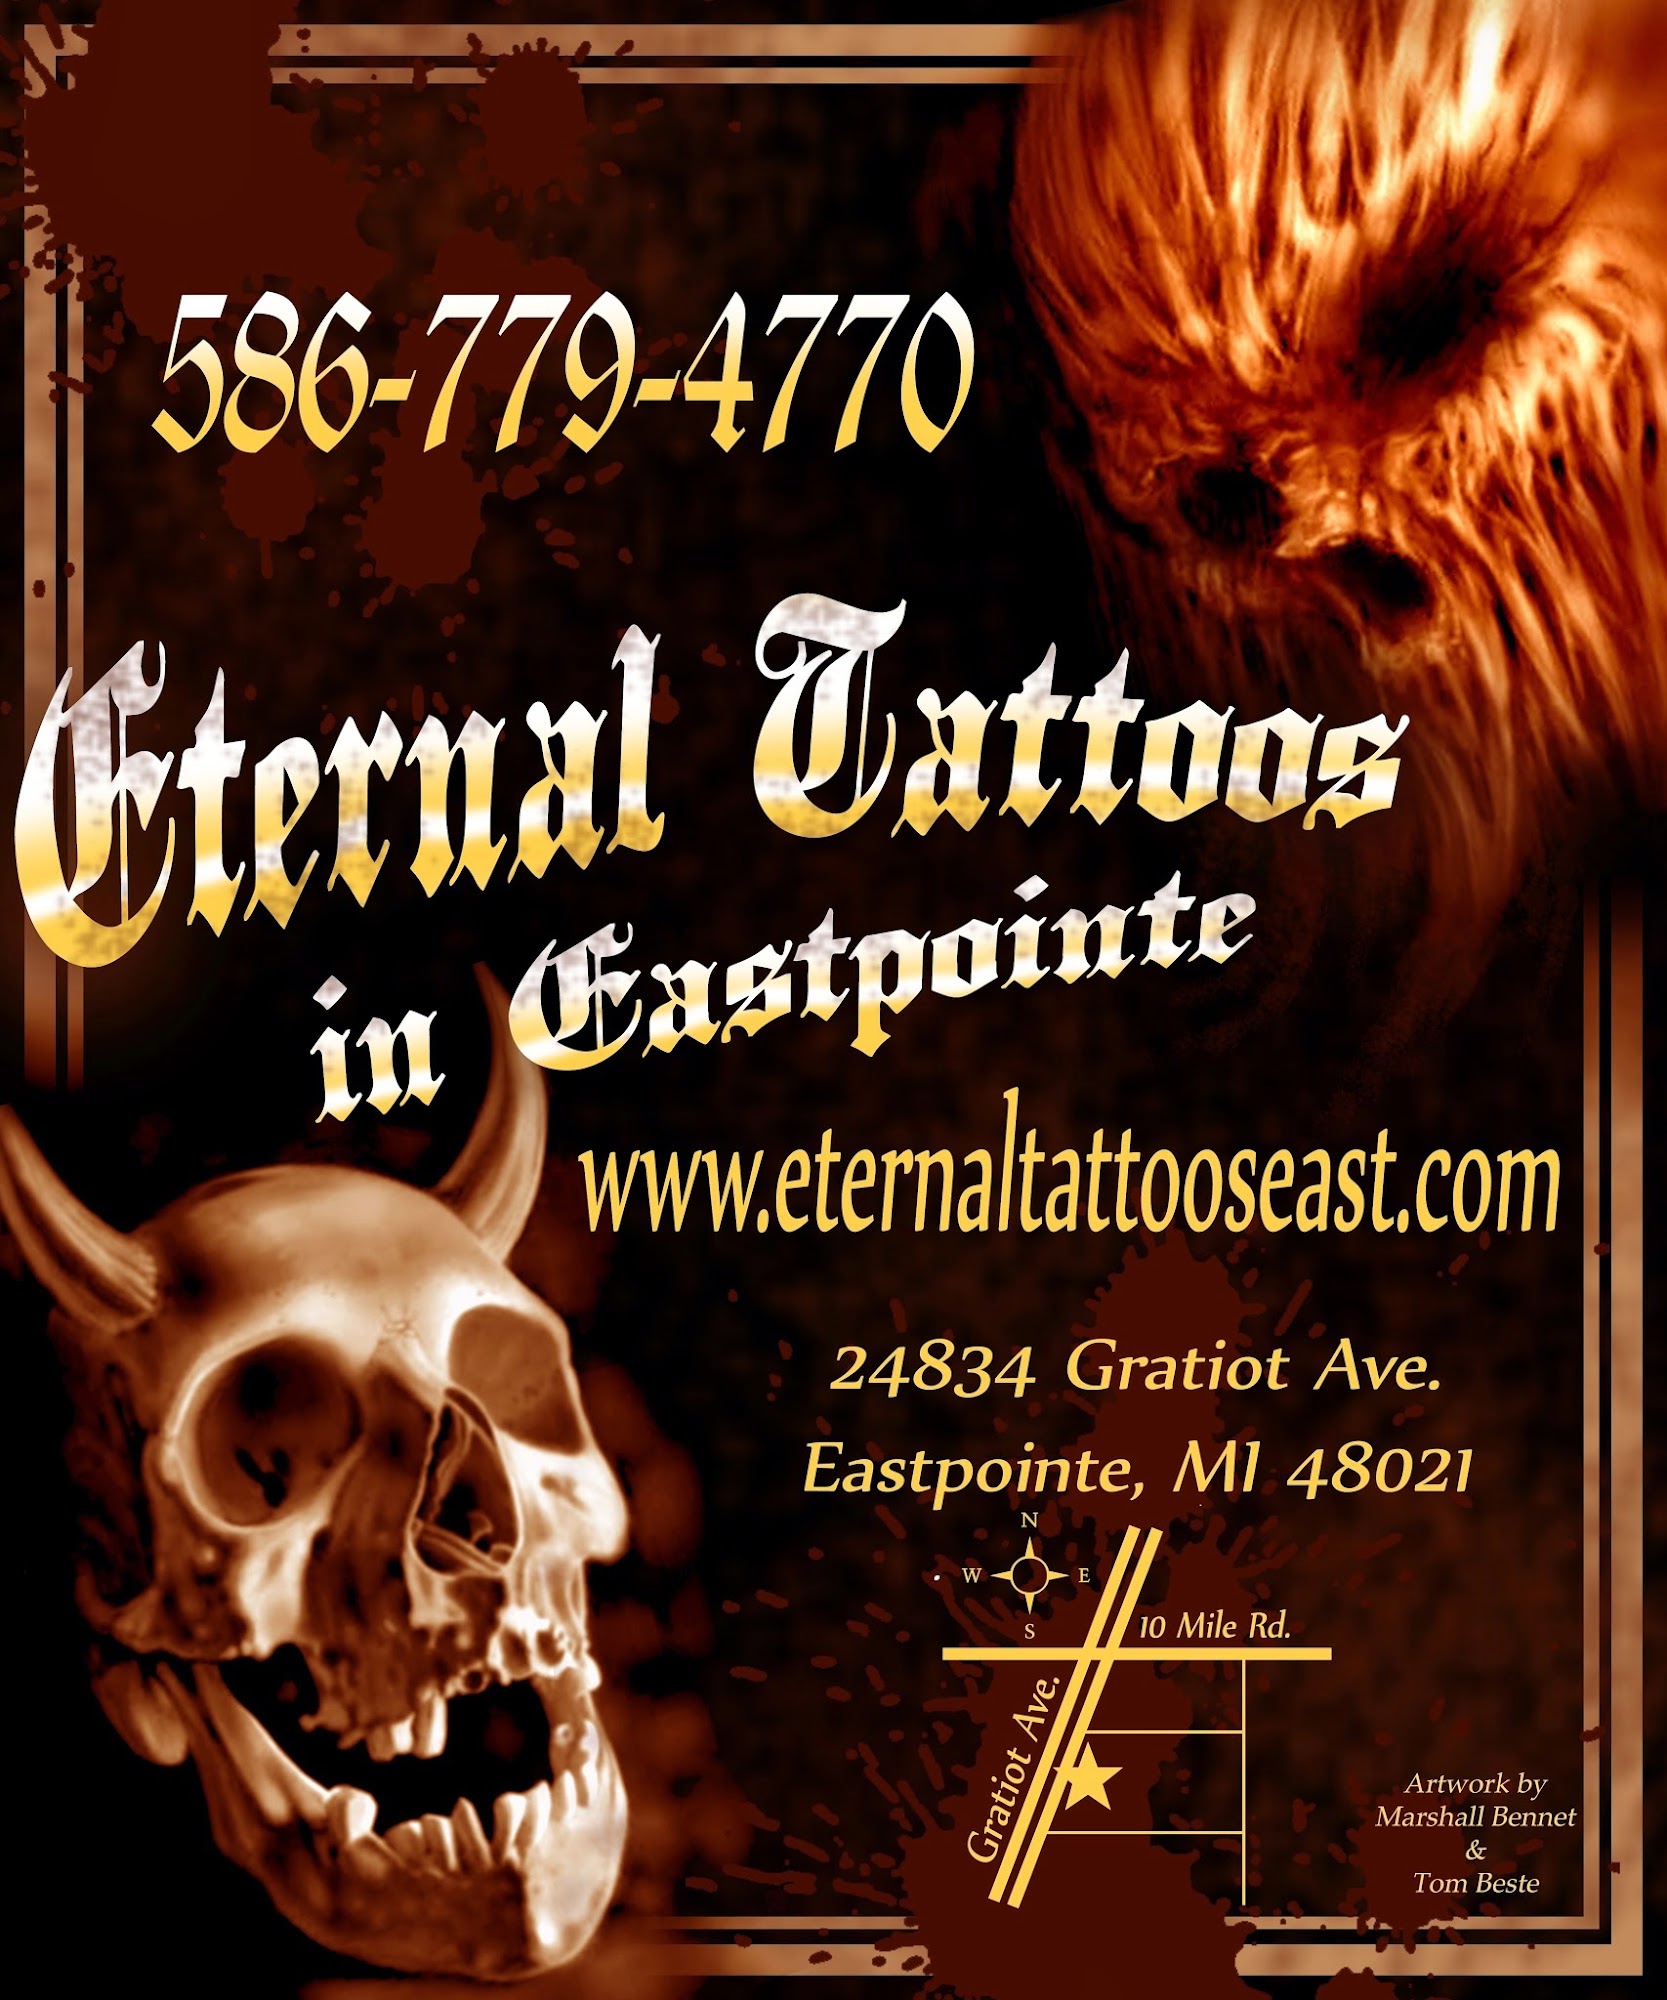 Eternal Tattoos Inc